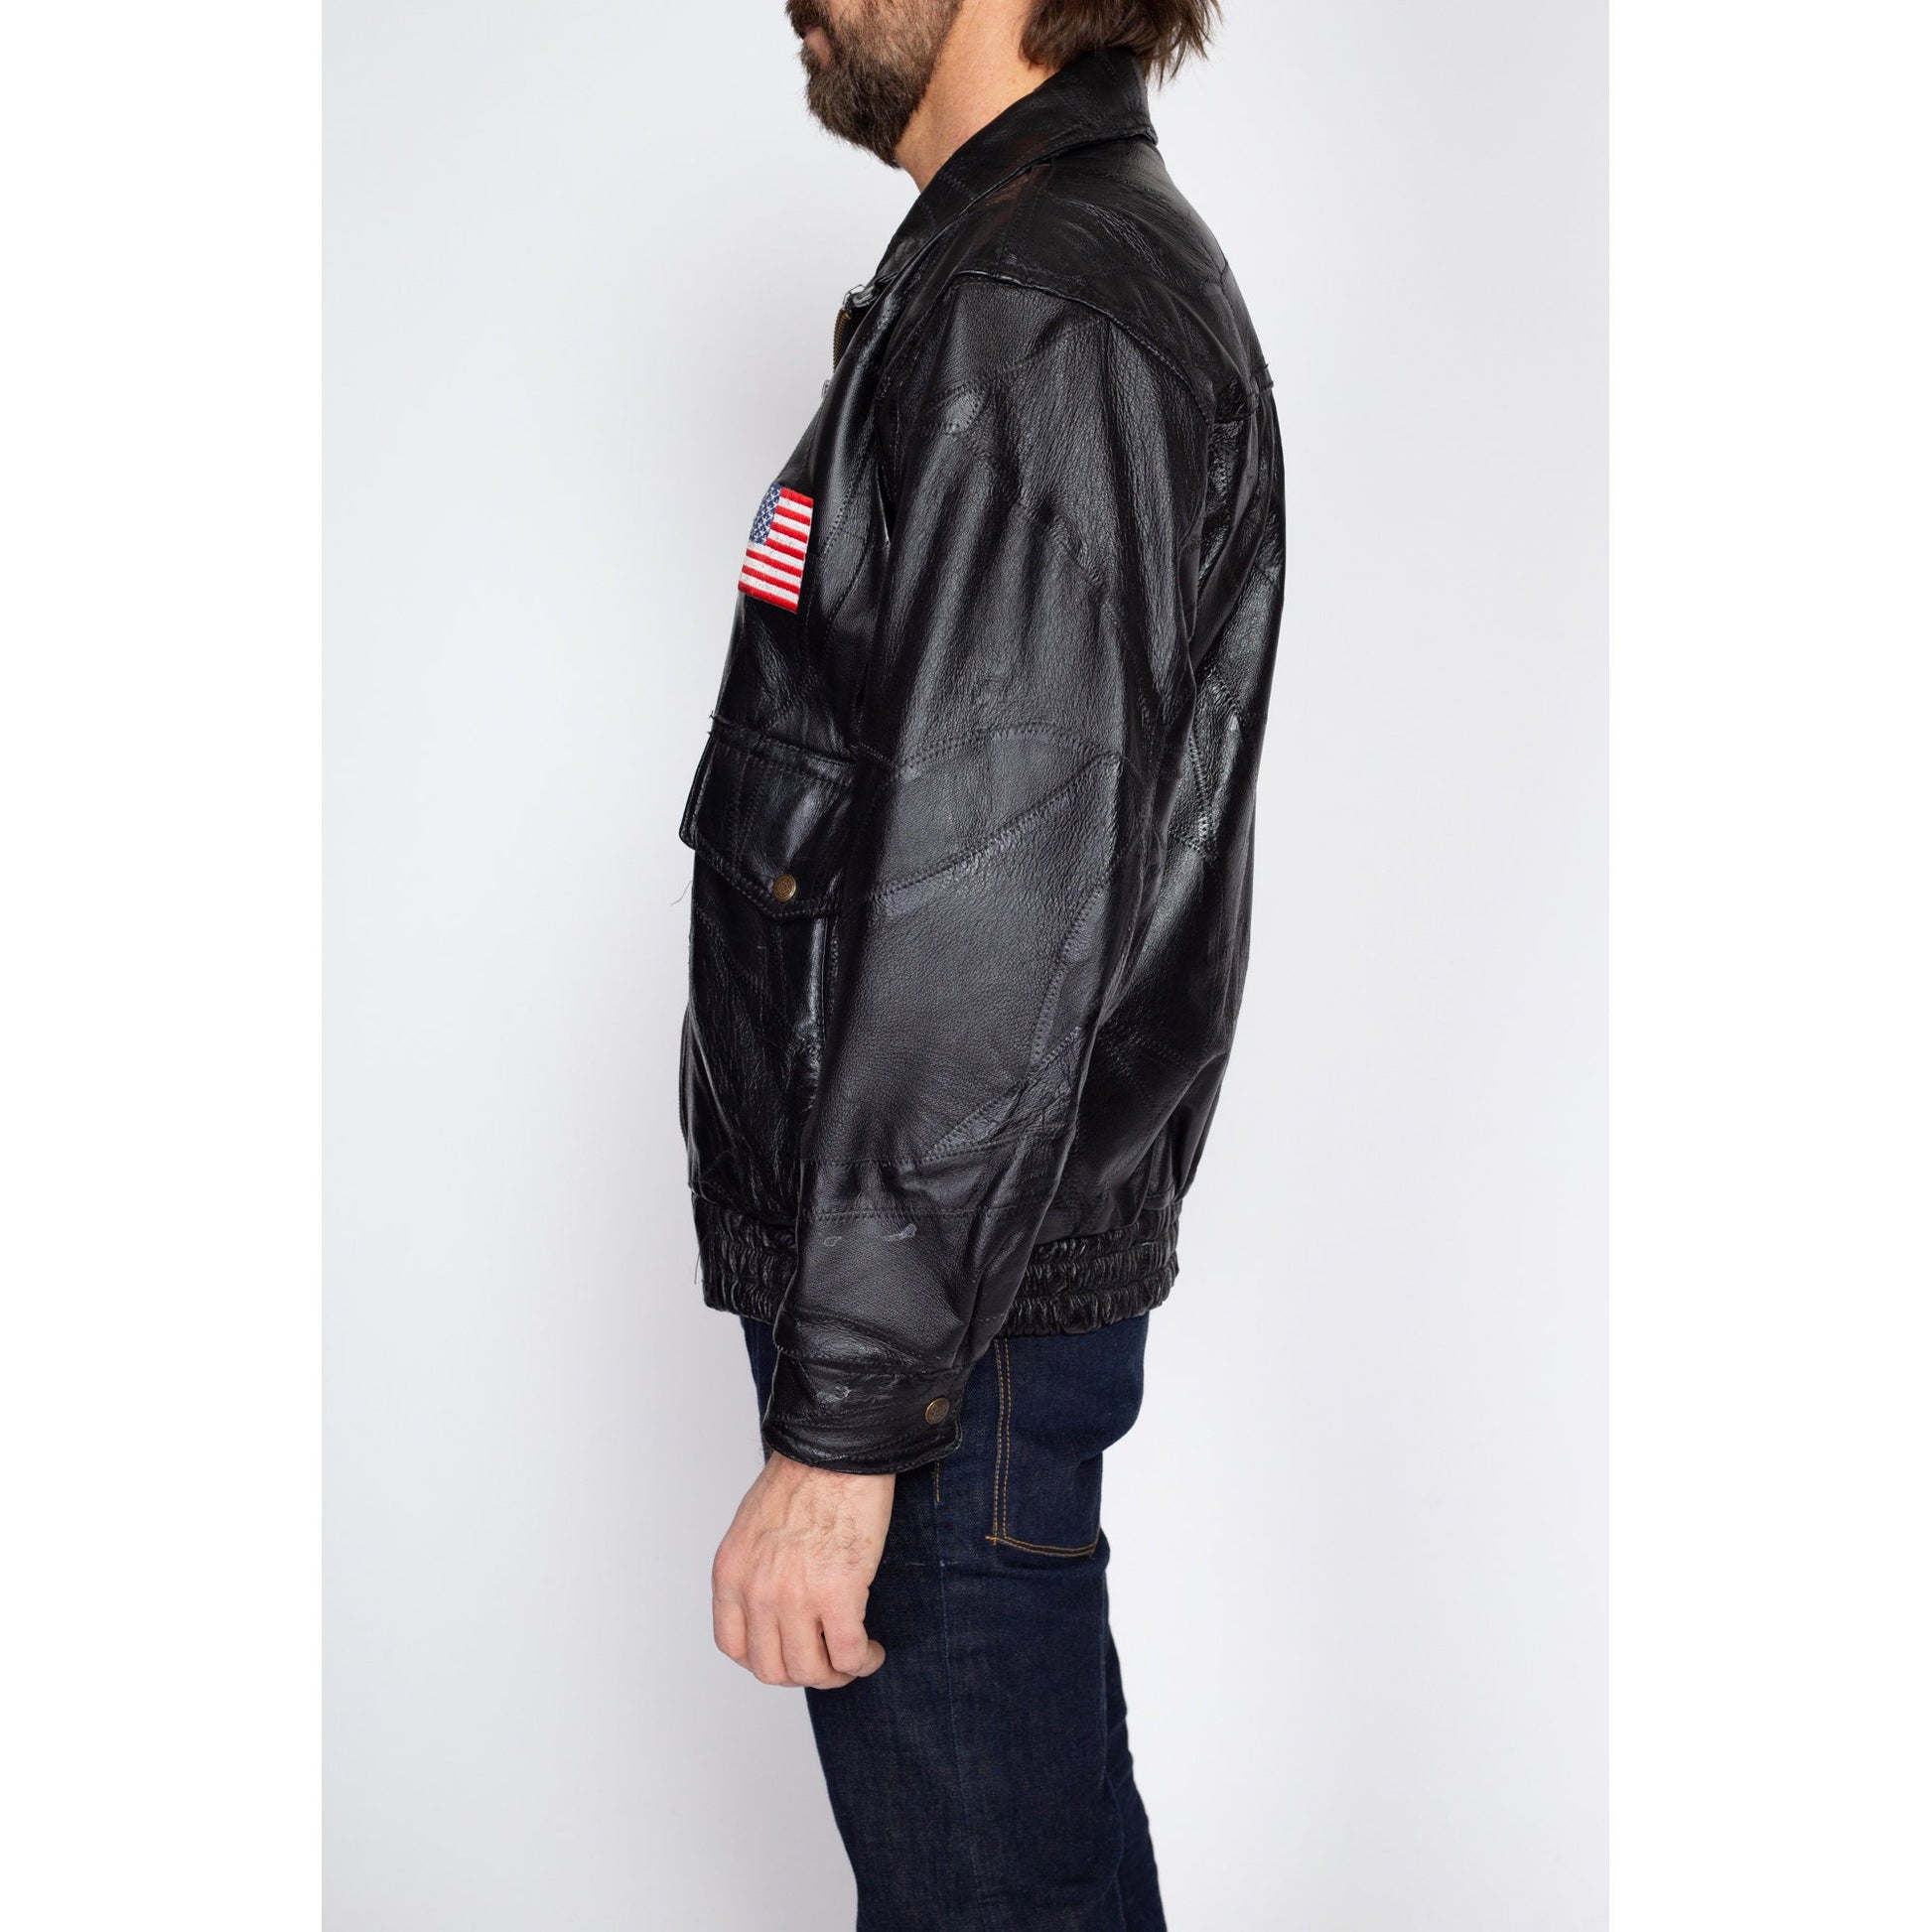 Medium 90s Black Patchwork Leather American Flag Moto Jacket | Vintage Eagle Patch Zip Up Motorcycle Biker Coat